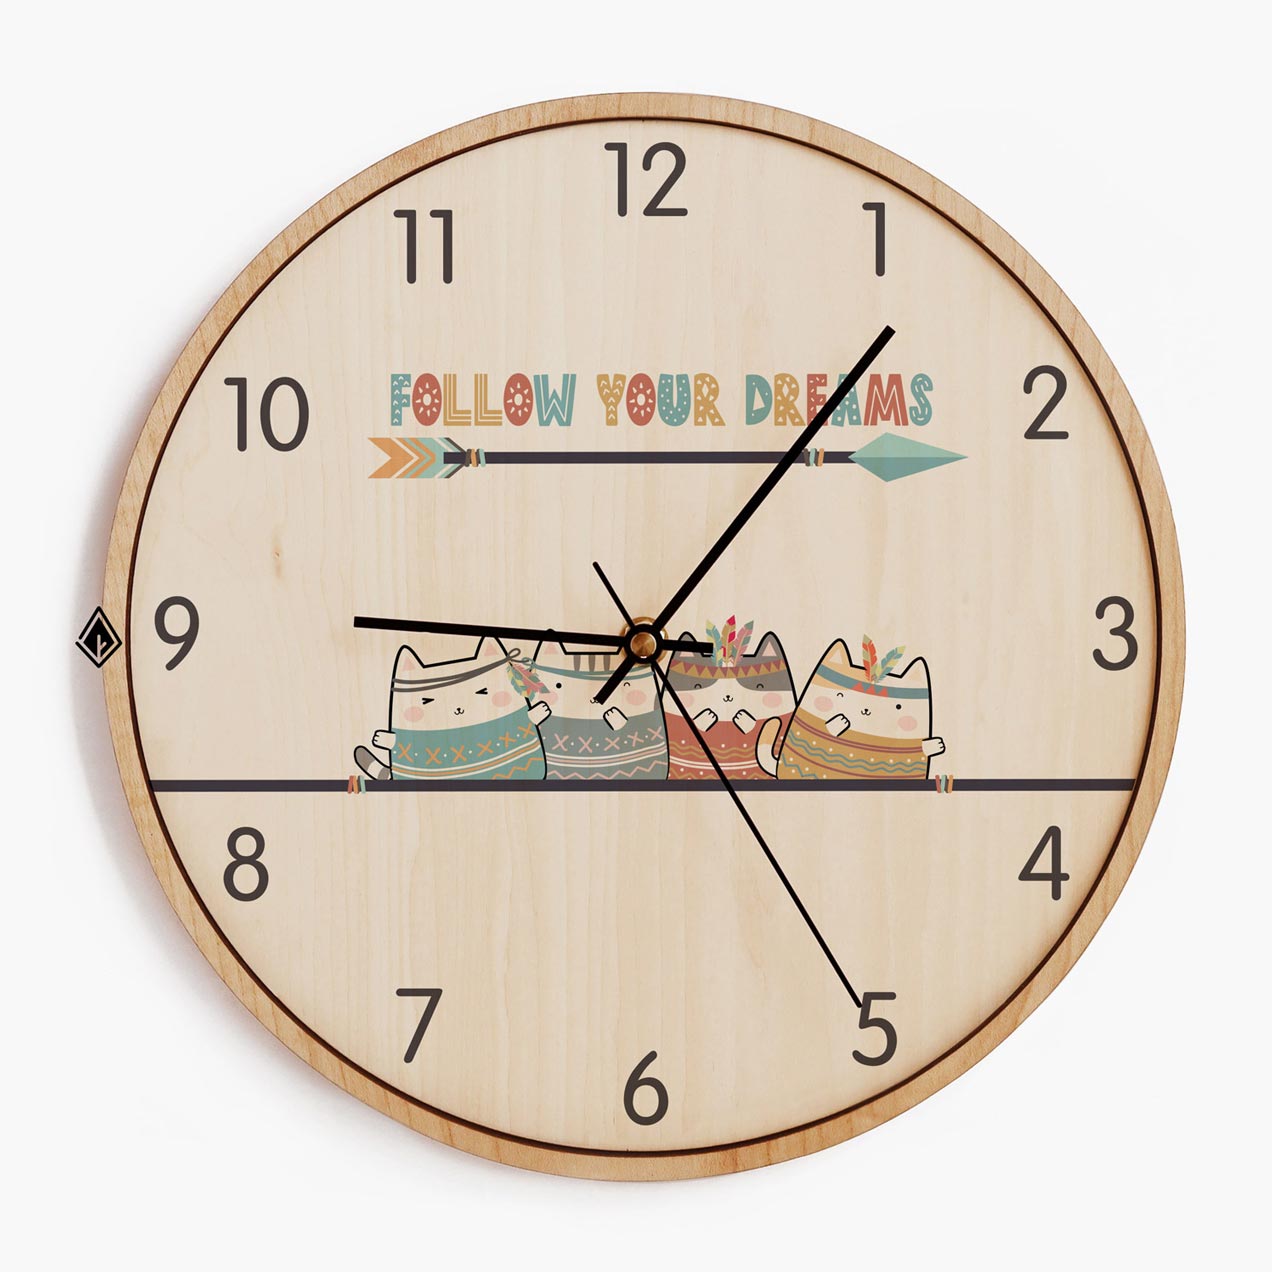 Wooden Wall Clocks Follow your dream